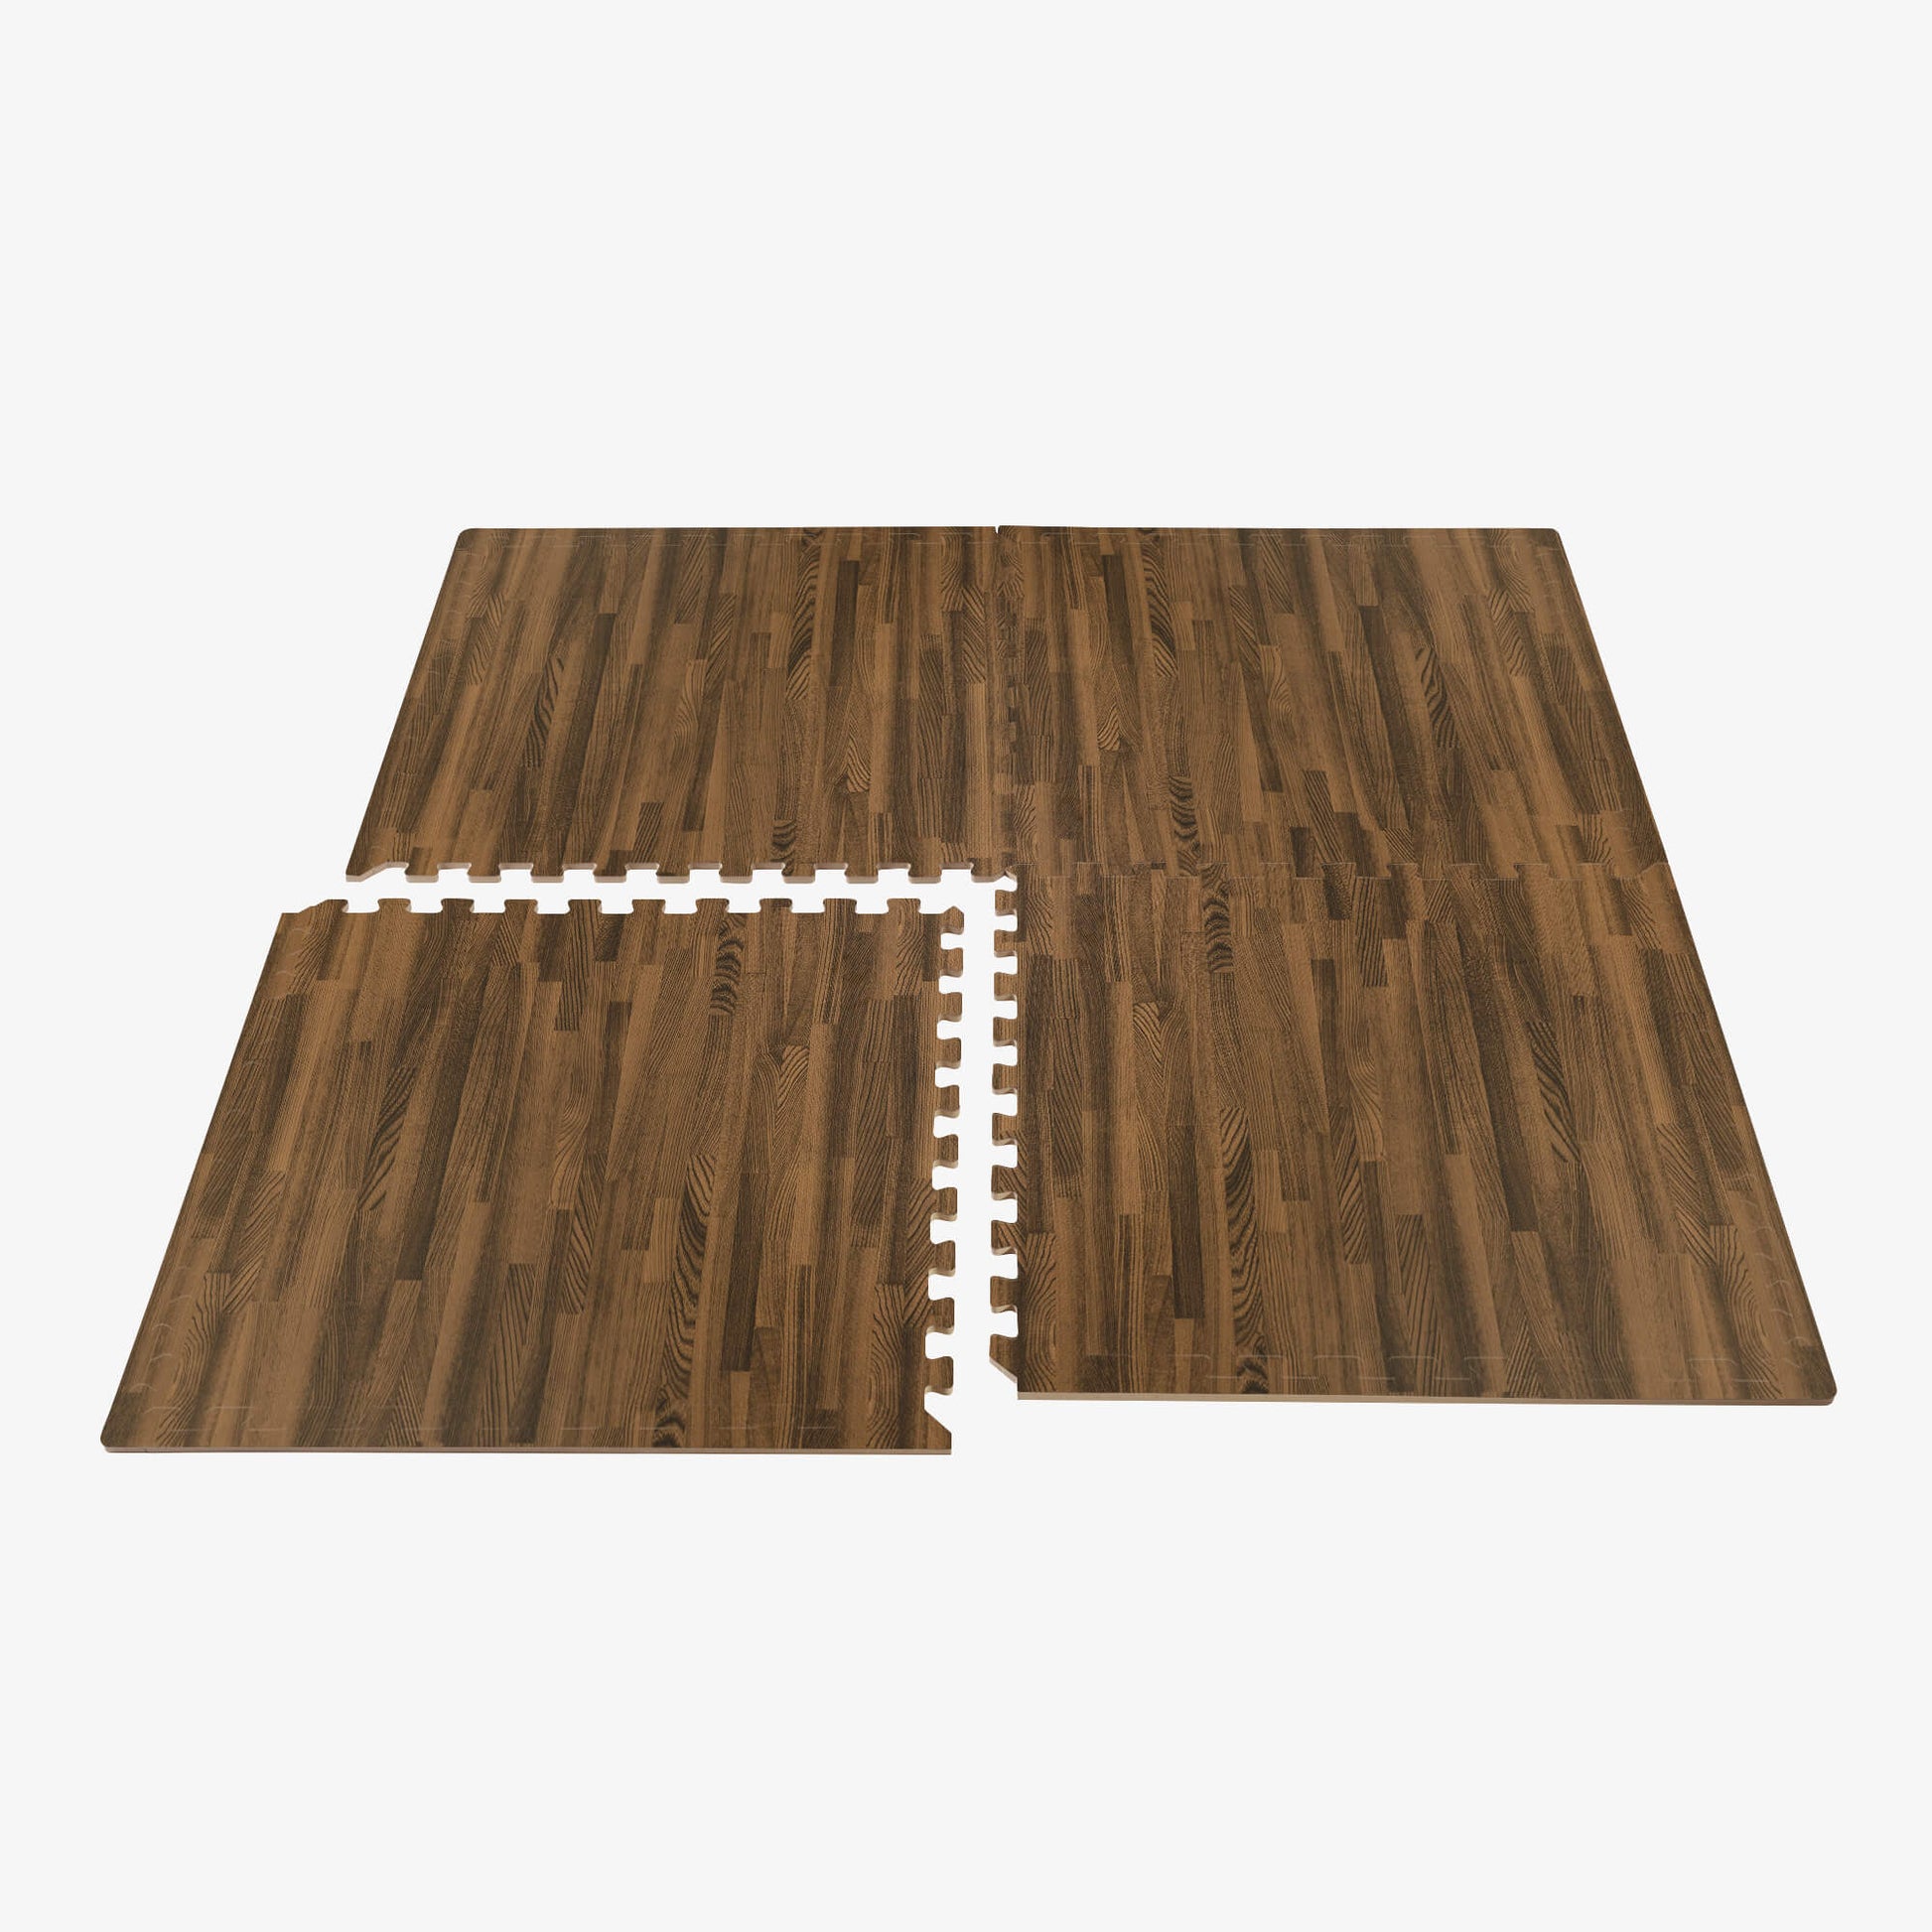 Forest Floor Farmhouse 3/8 Inch Thick Printed Foam Tiles, Premium Wood  Grain Interlocking Foam Floor Mats, Anti-Fatigue Flooring – Stylish  Flooring